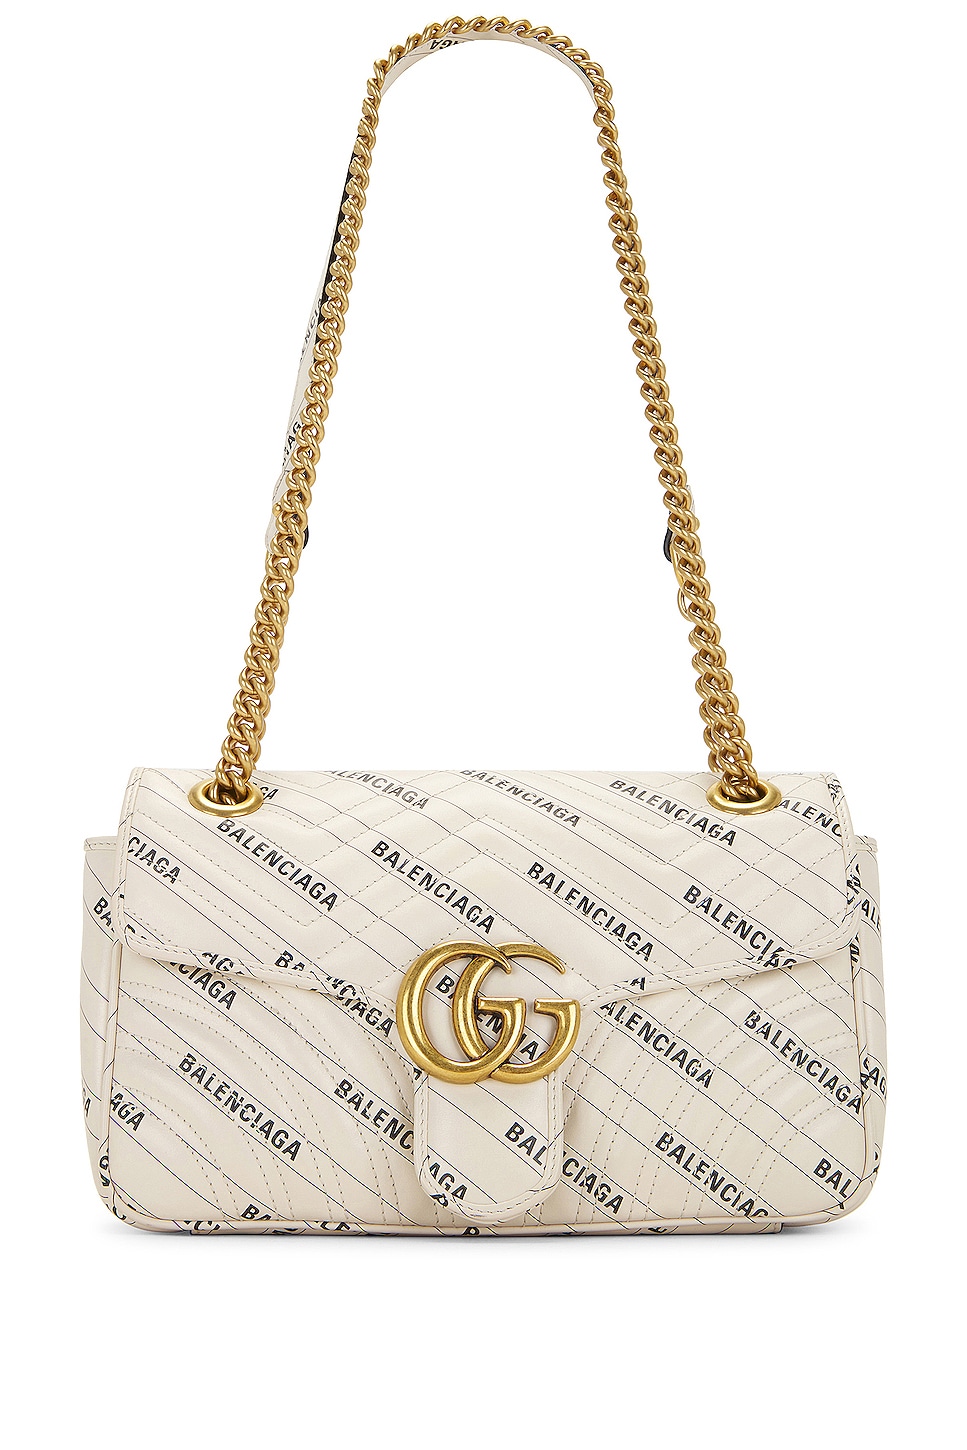 FWRD Renew Gucci Dionysus Chain Shoulder Bag in Rose Gold